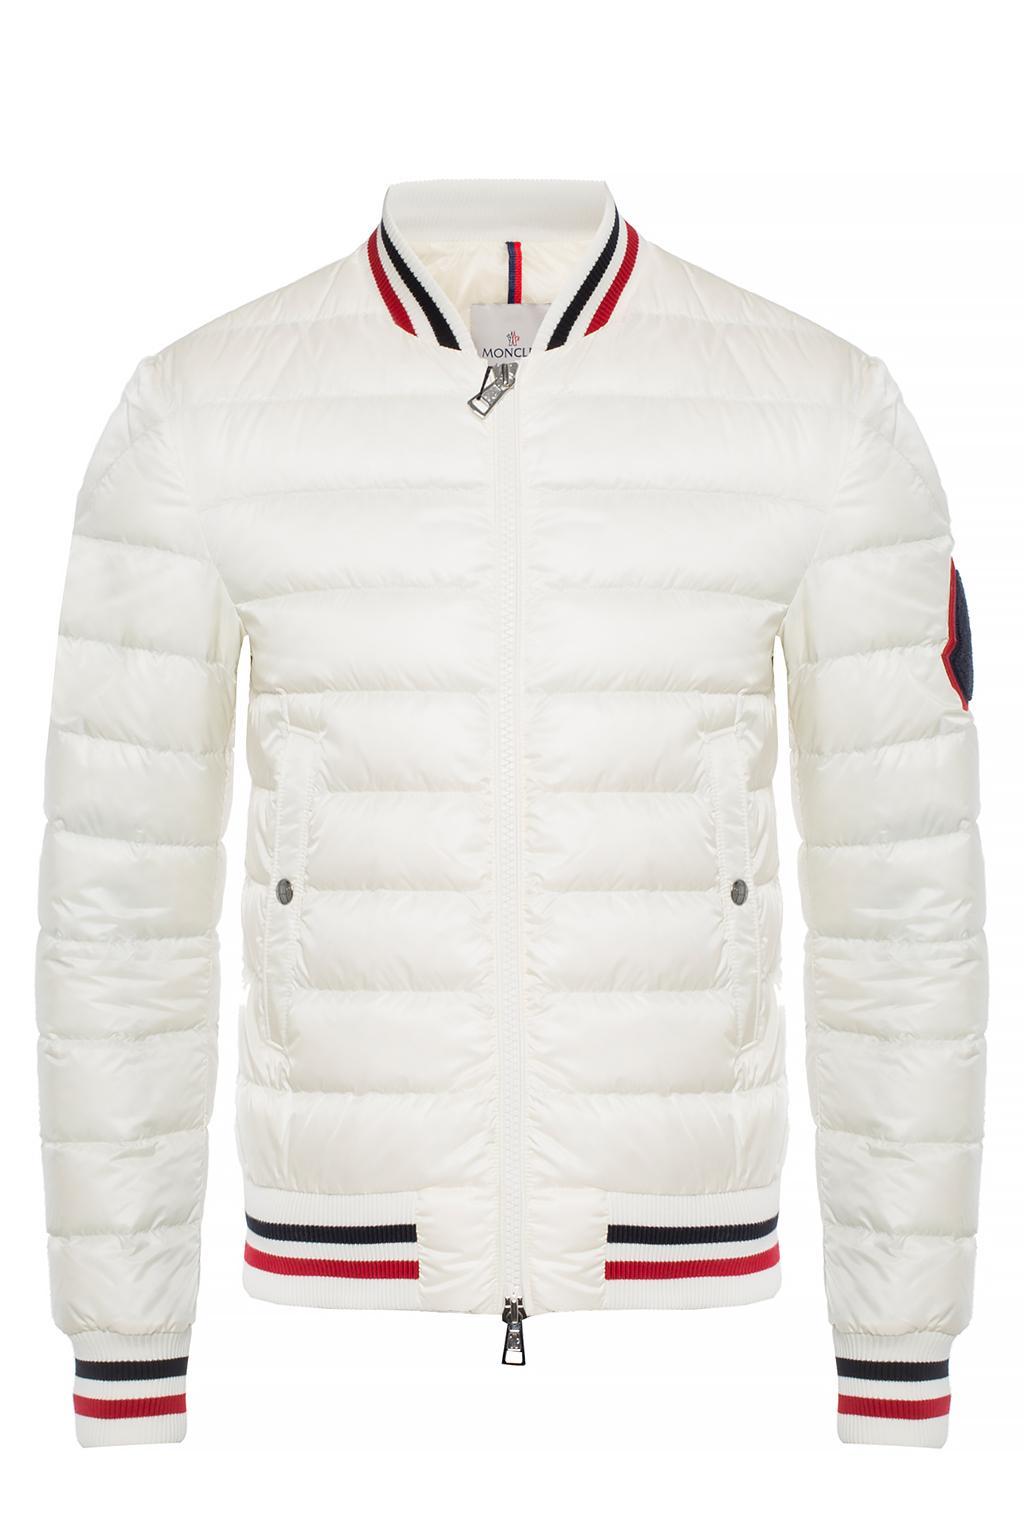 moncler white jacket